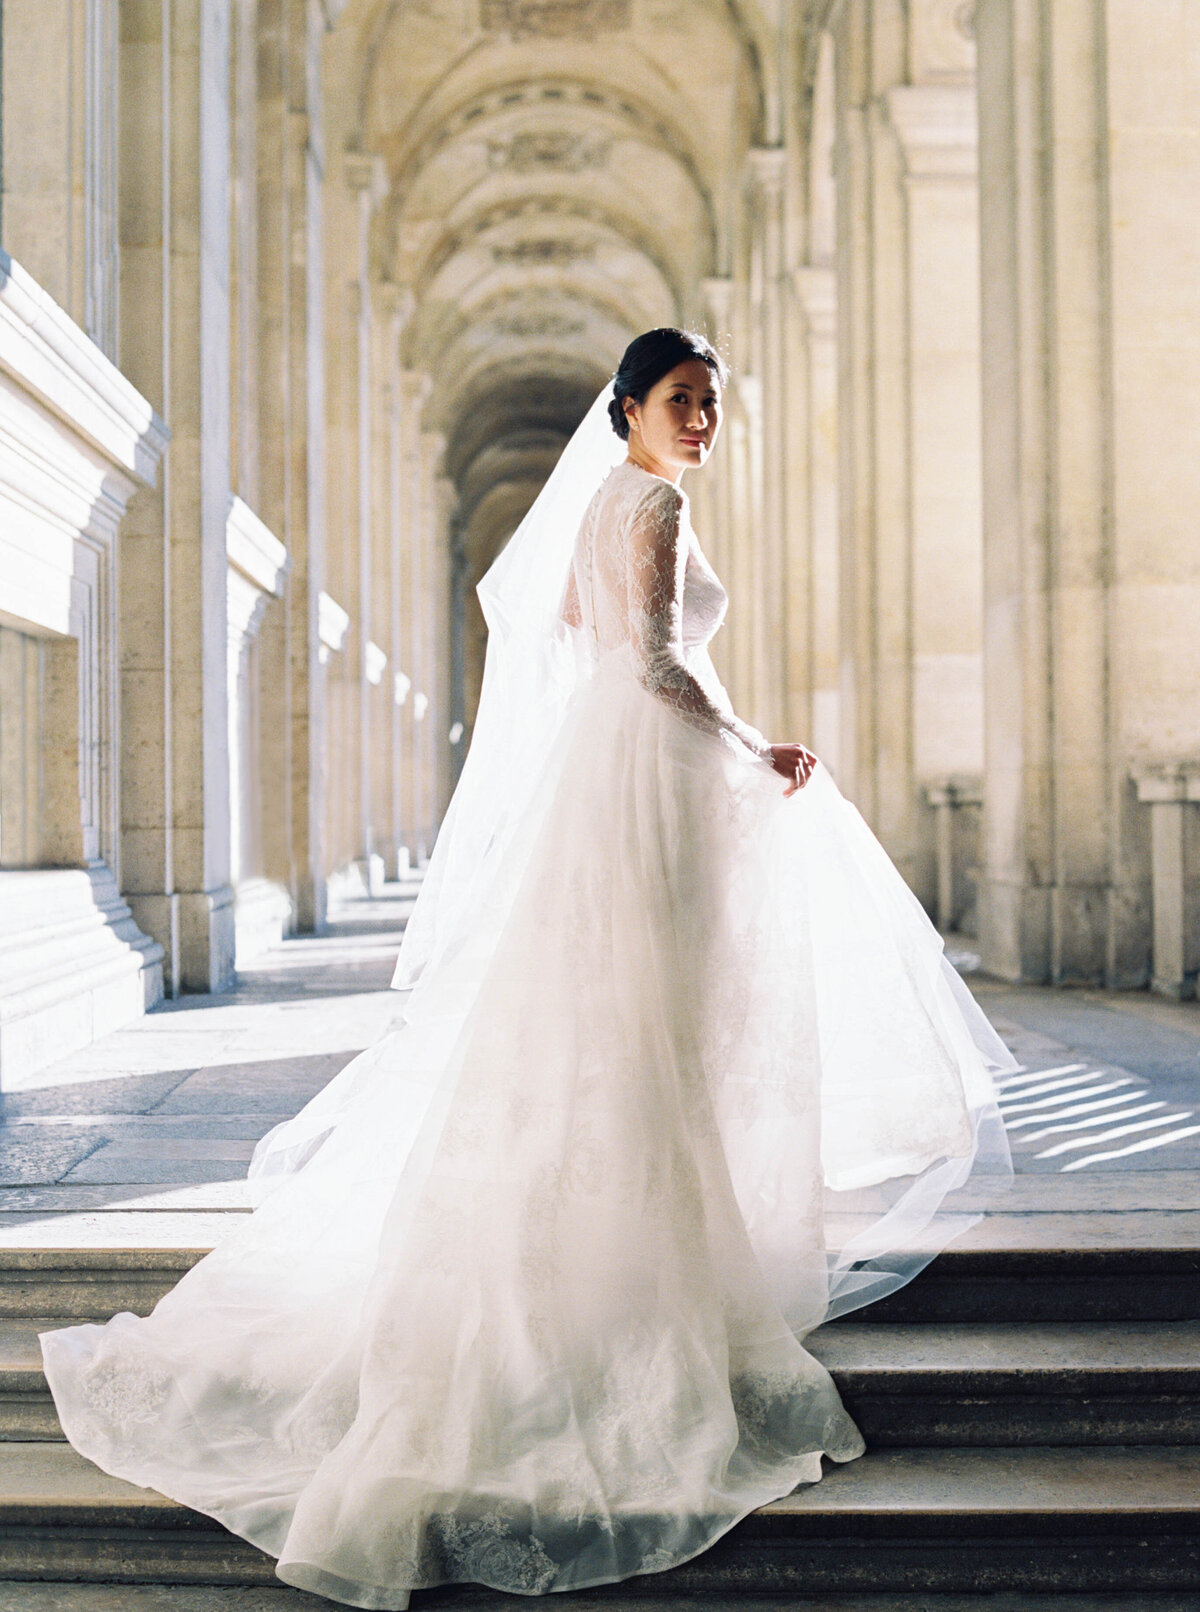 Paris Louvre Wedding Photographer - Janna Brown